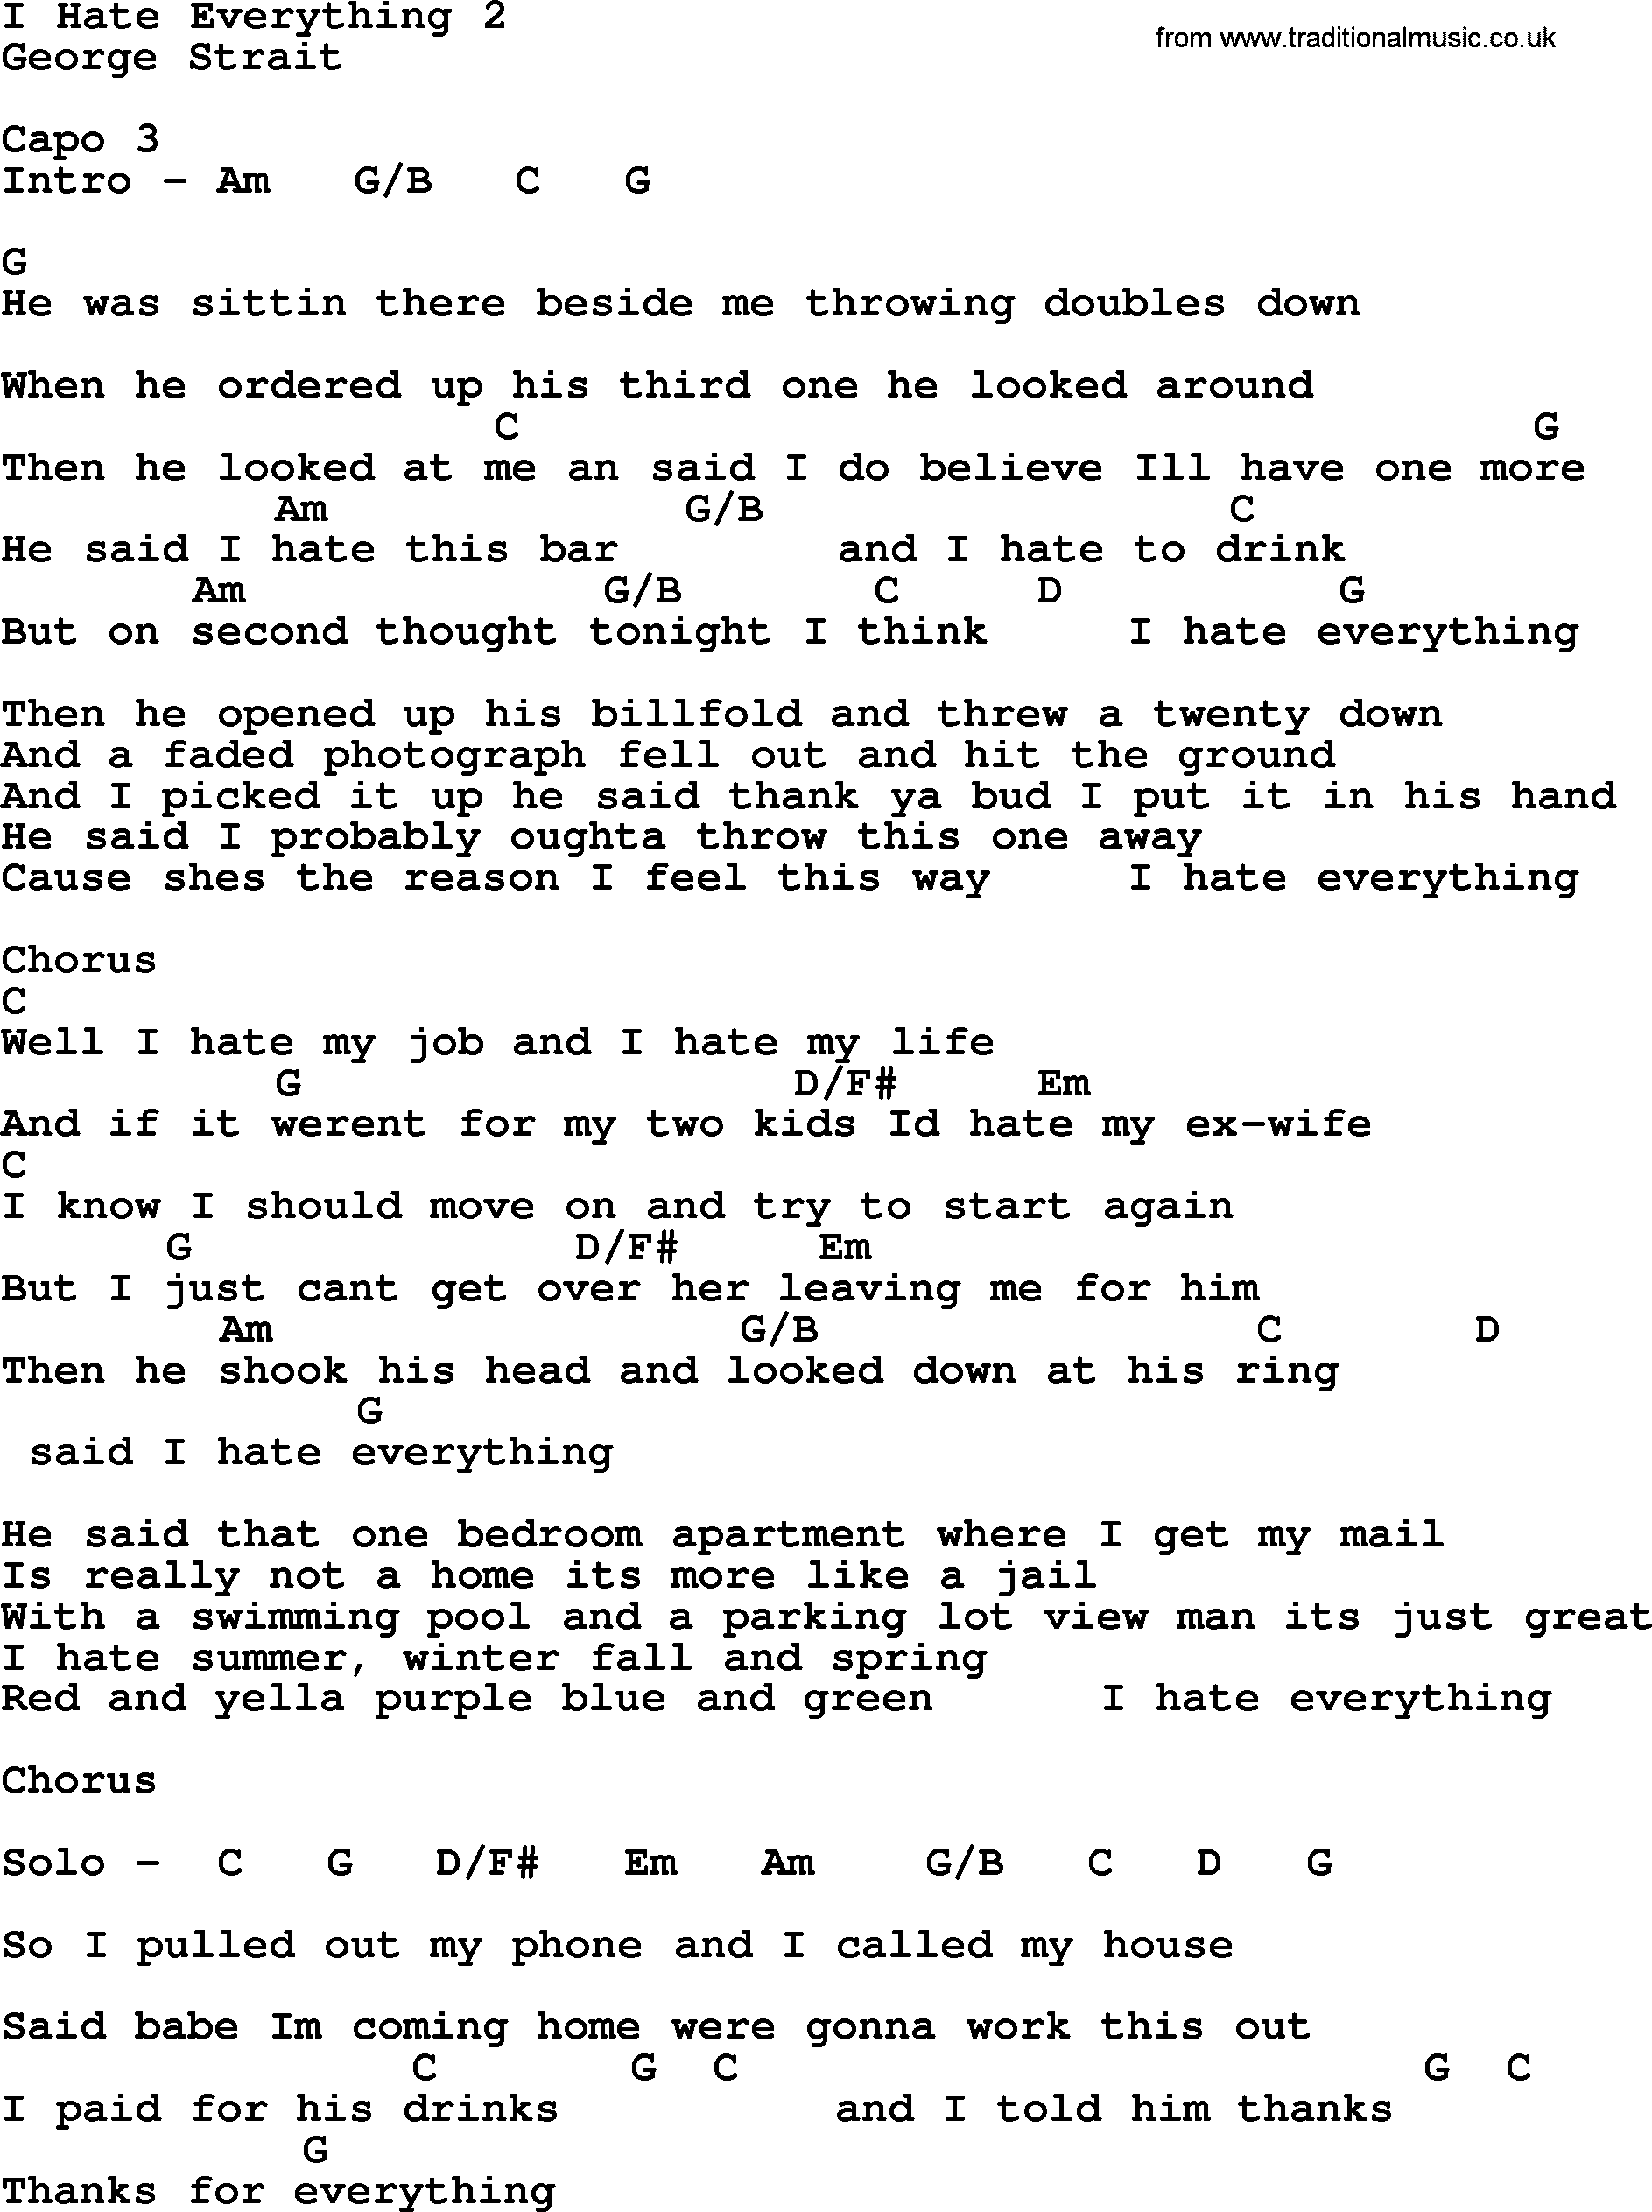 George Strait song: I Hate Everything 2, lyrics and chords